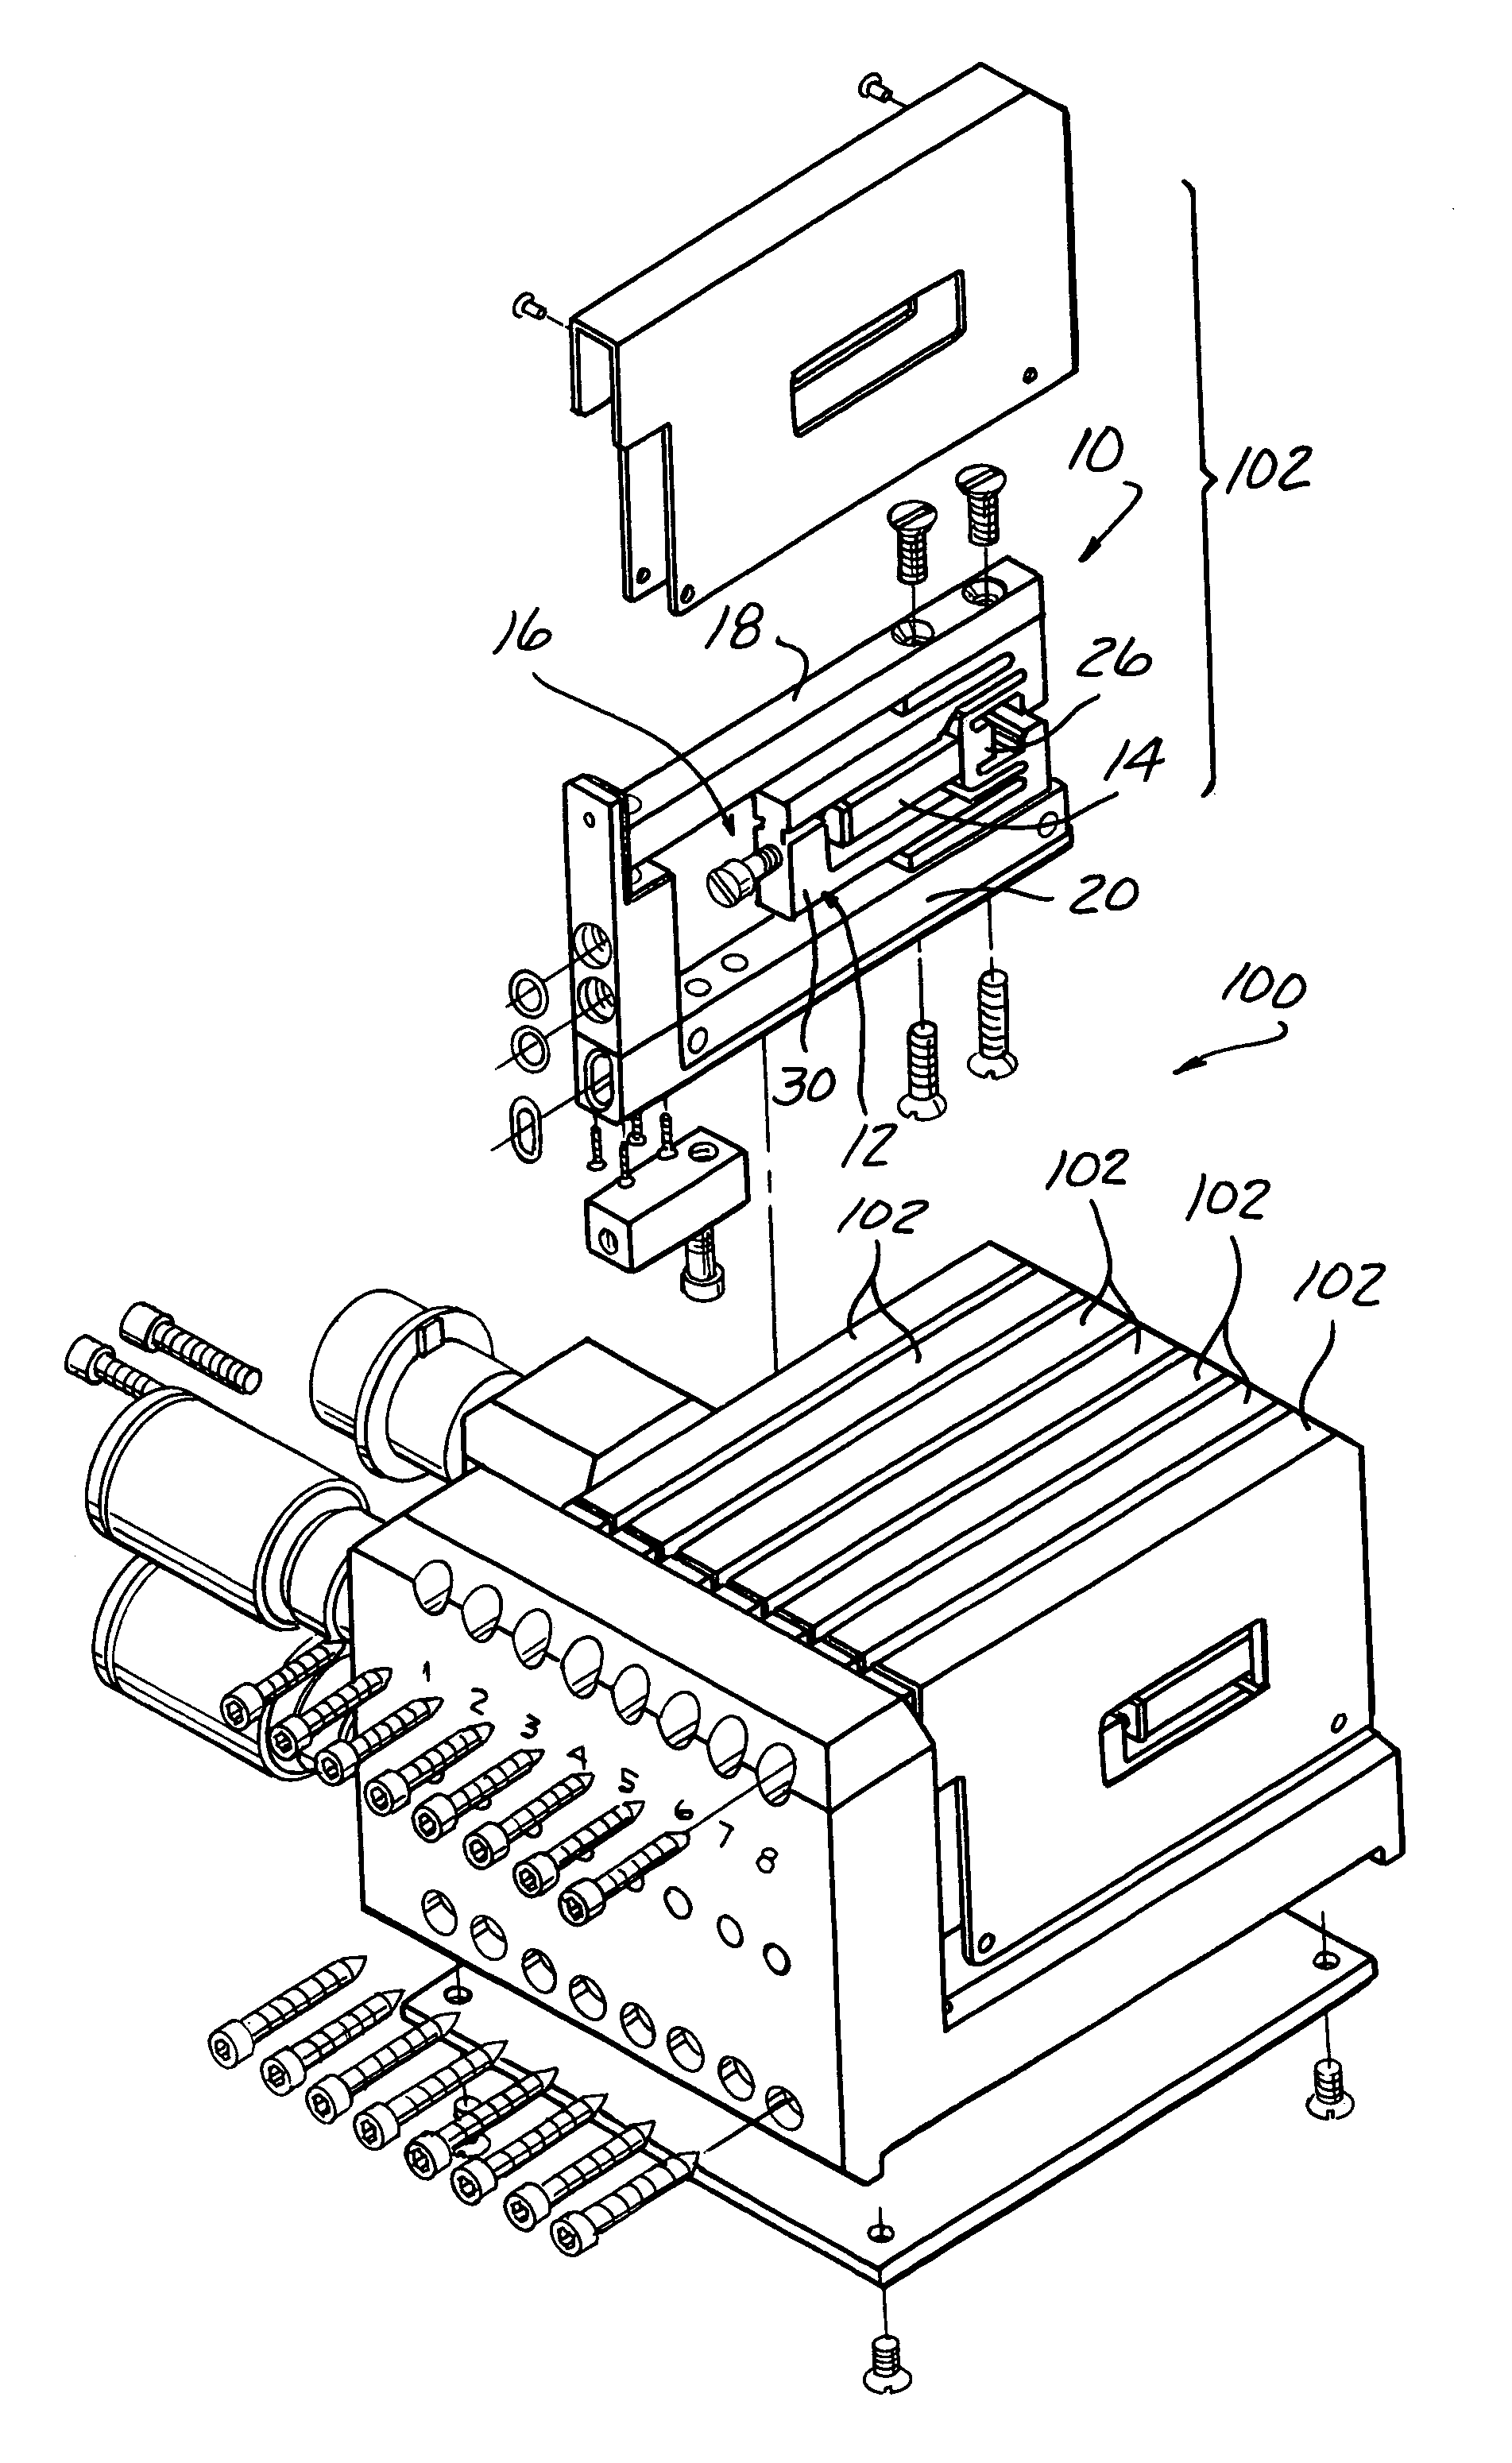 Piezo-electric actuated multi-valve manifold